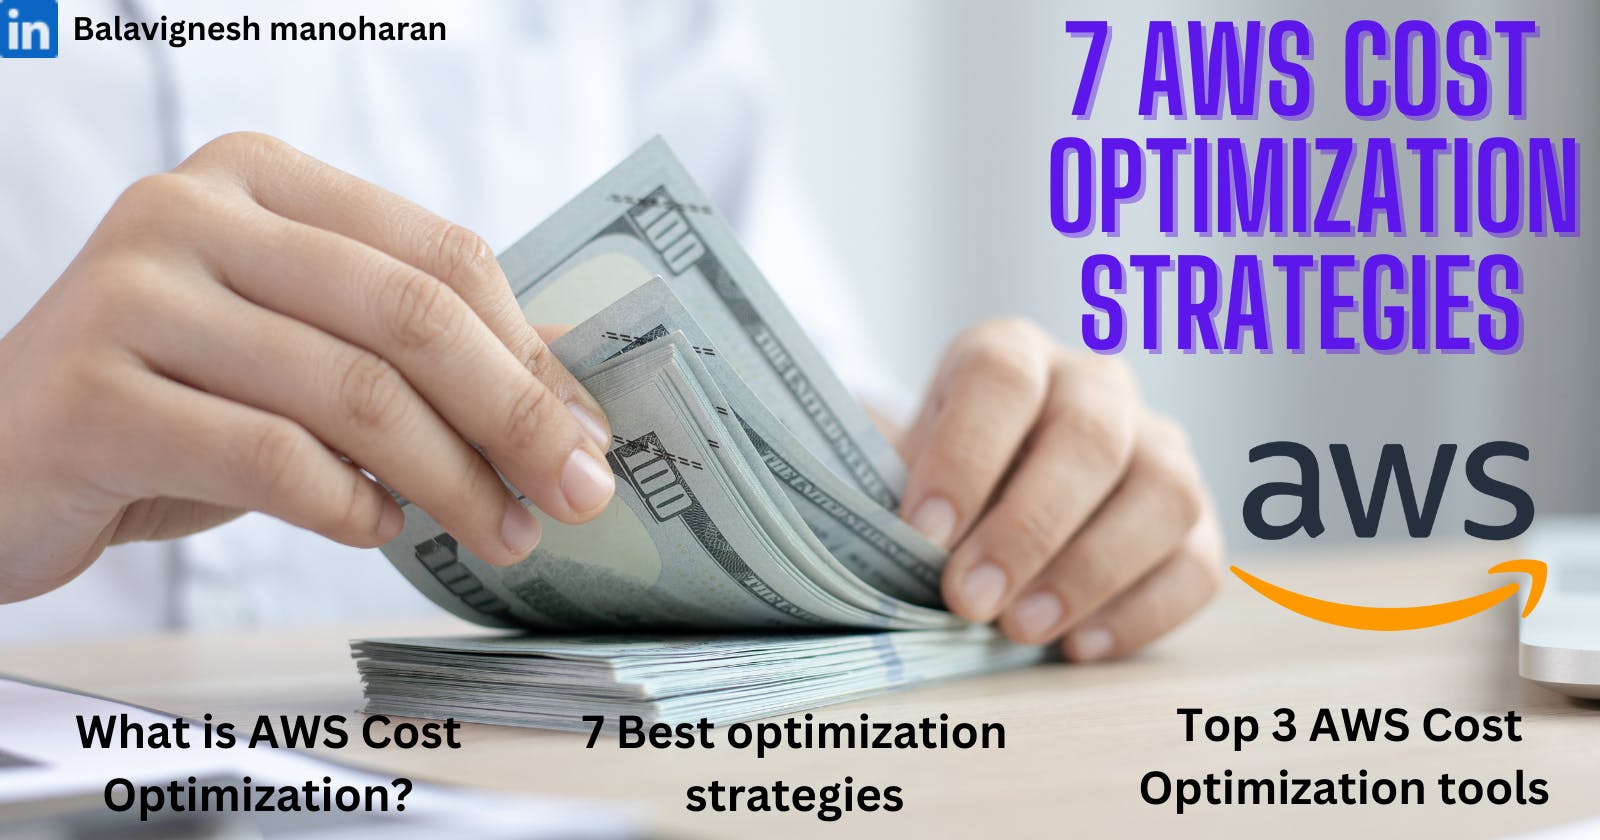 AWS Cloud Cost Optimization Strategies / Best Practices